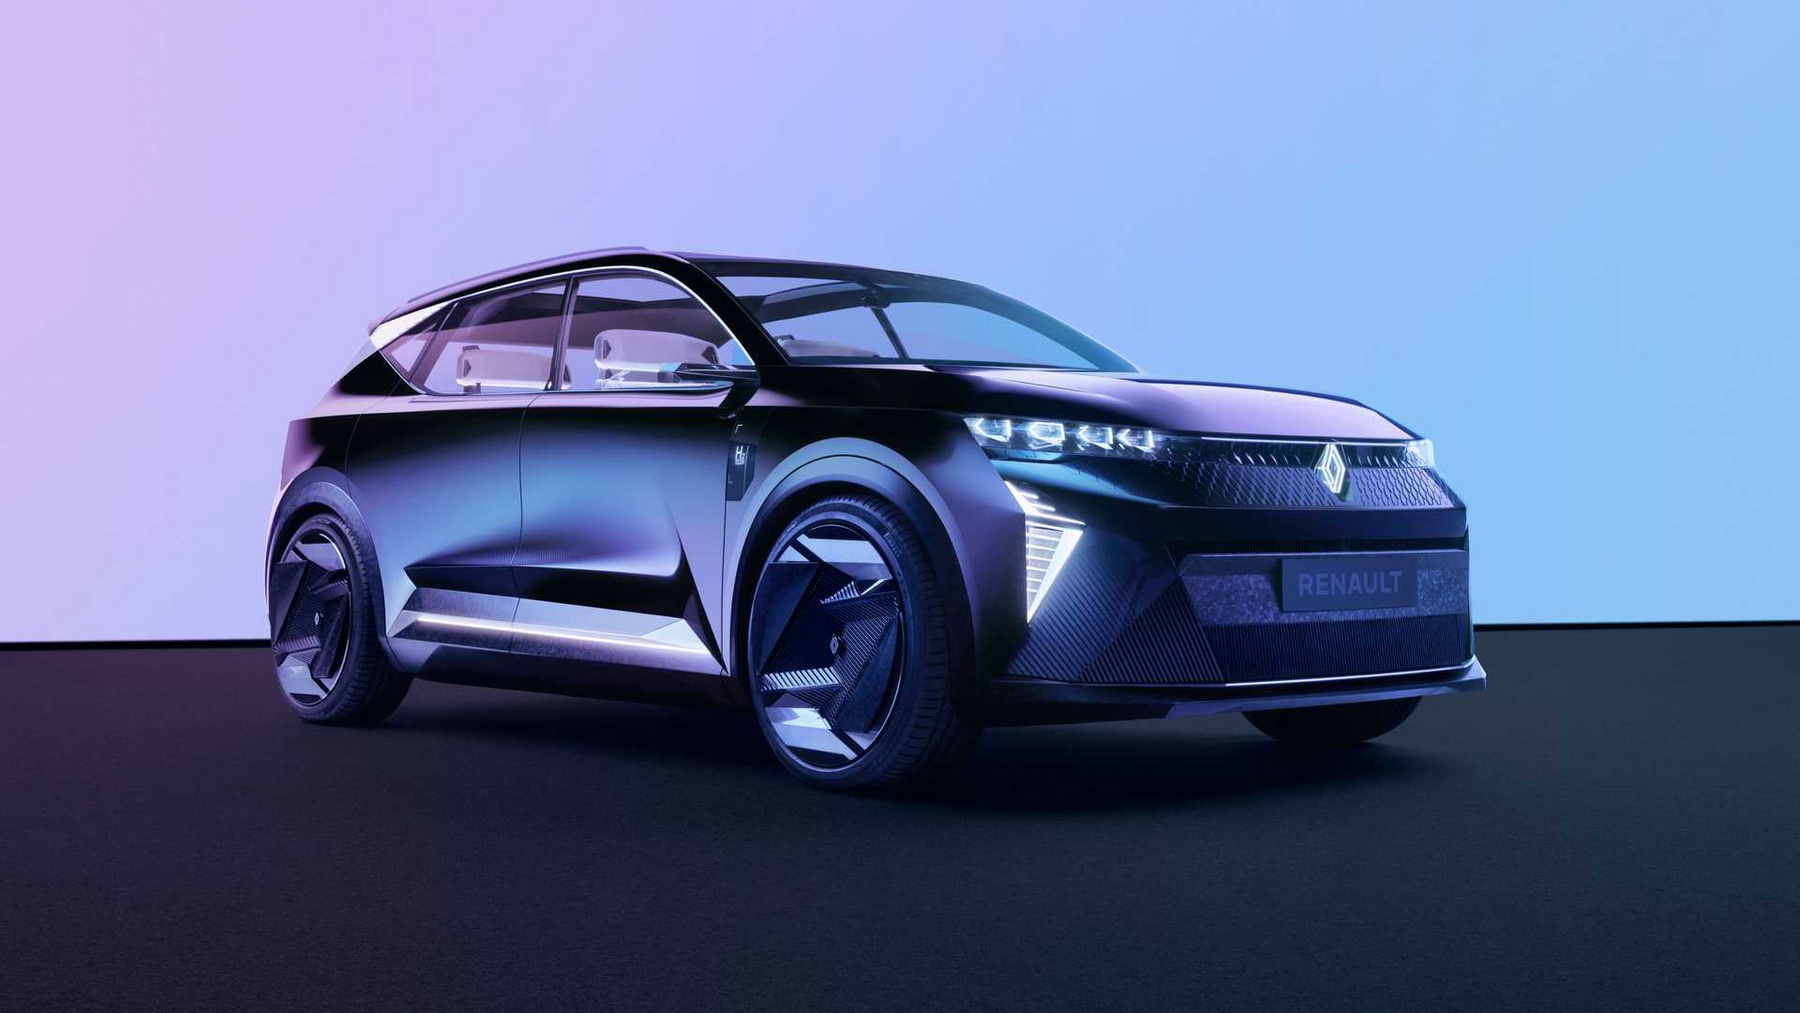 Renault Scenic Vision villannyal